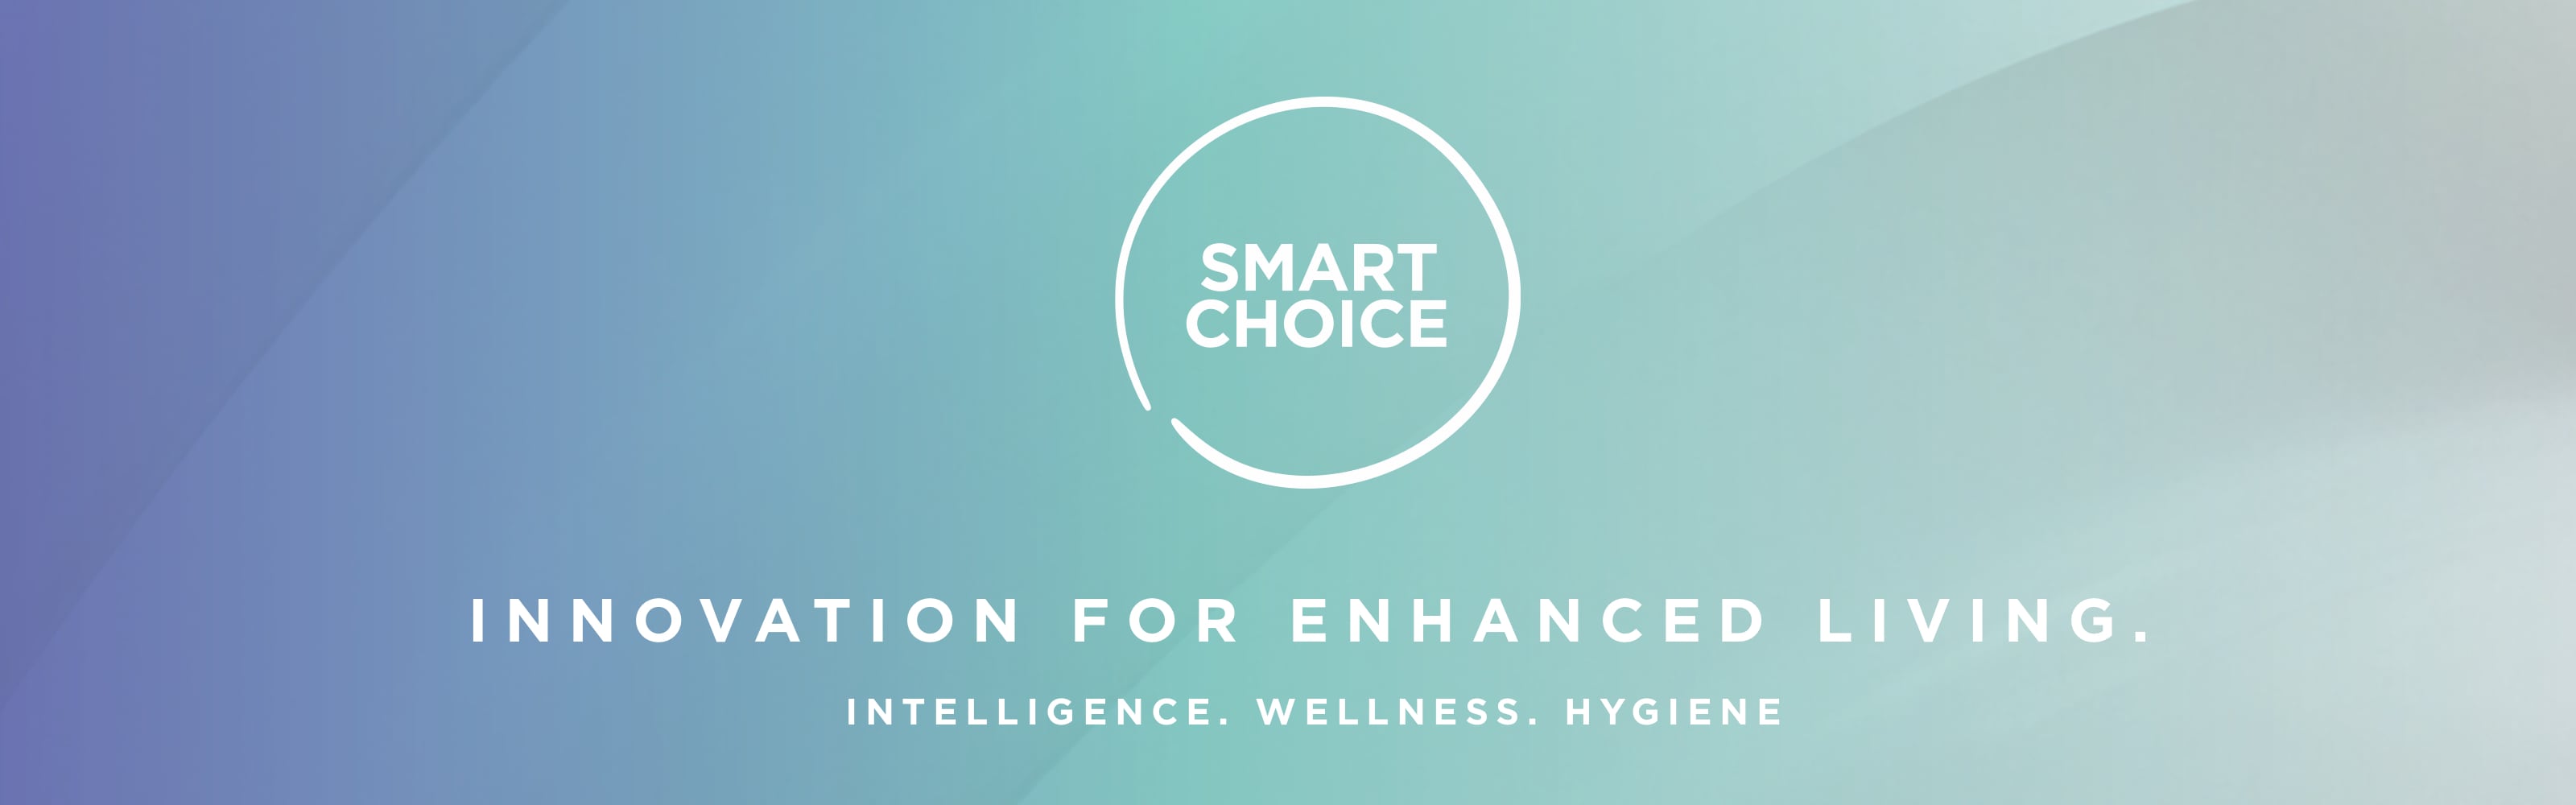 Smart Choice - Innovation For Enhanced Living